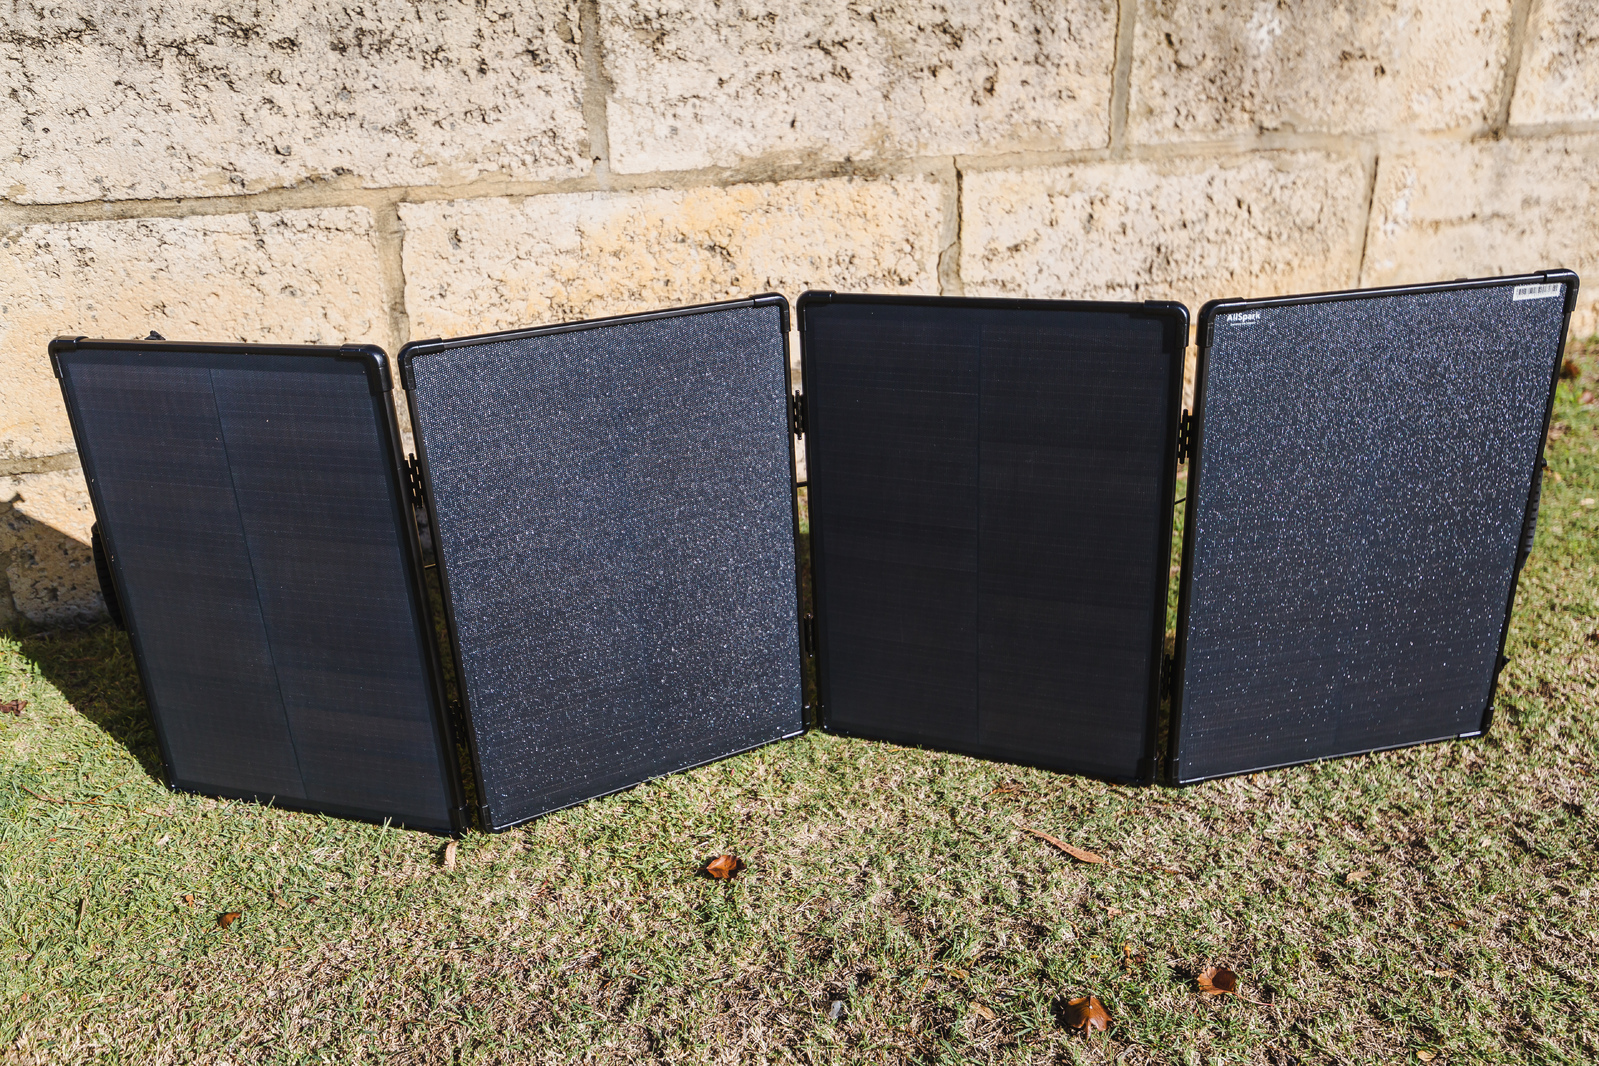 AllSpark Quad fold 200w Portable Folding Solar panel